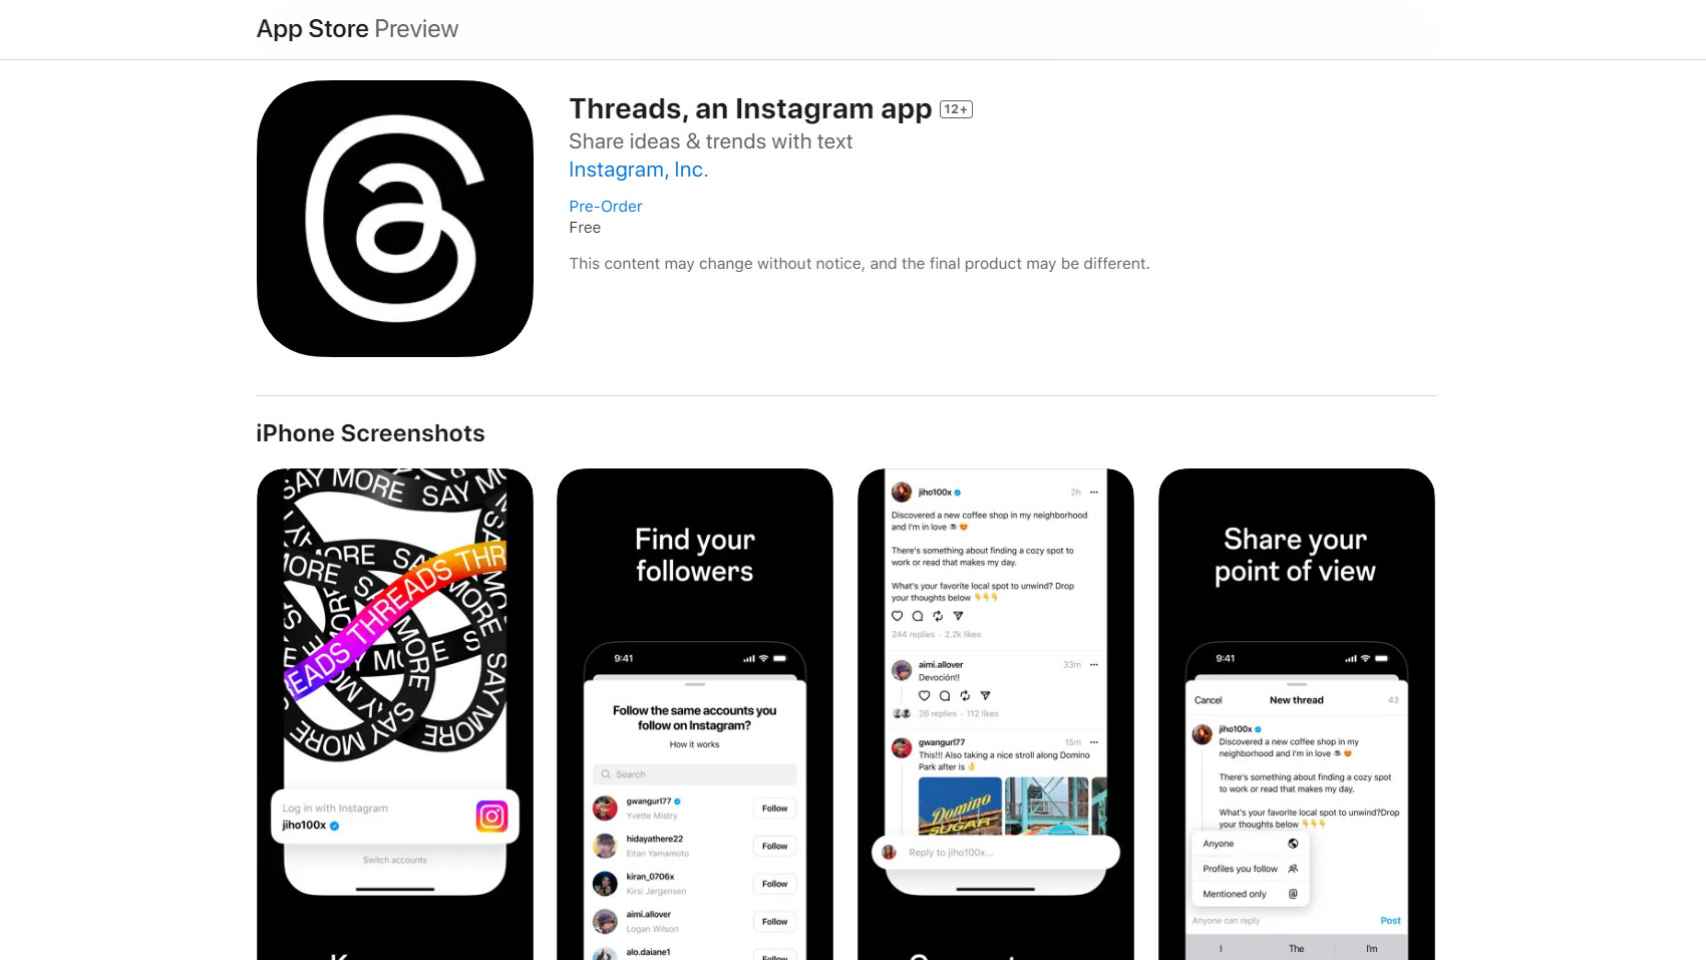 Captura de App Store con Threads